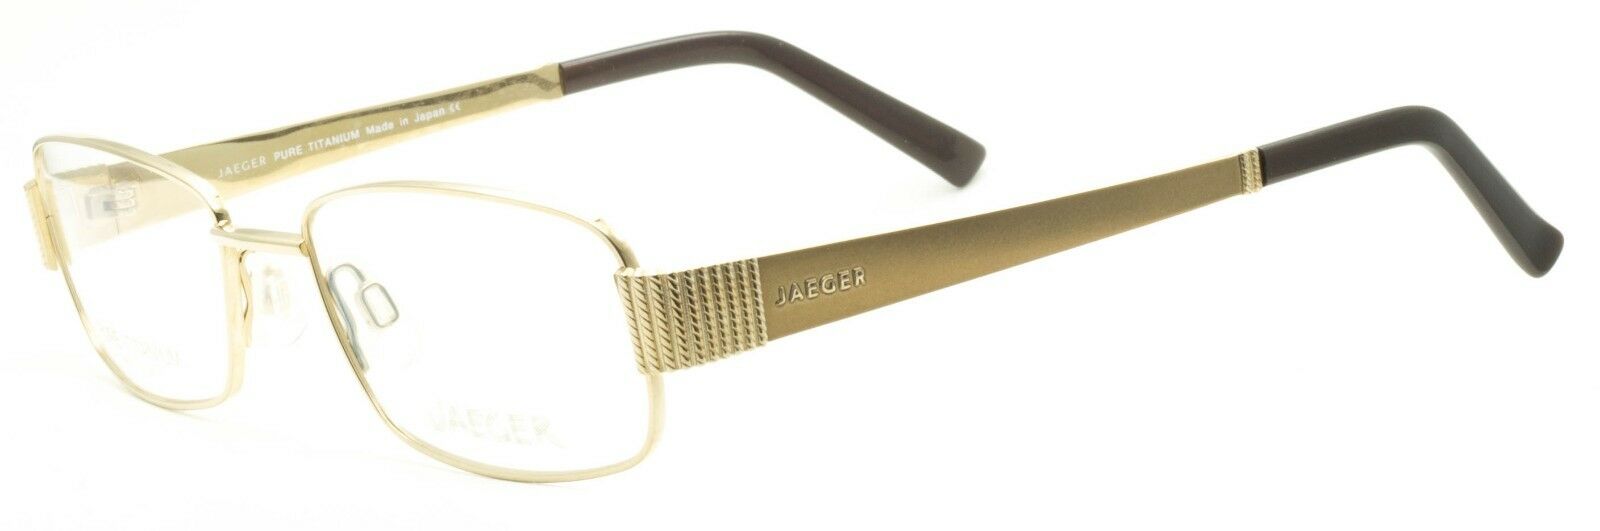 JAEGER Mod. 278 C.15 52mm Eyewear FRAMES RX Optical Glasses Eyeglasses New Japan